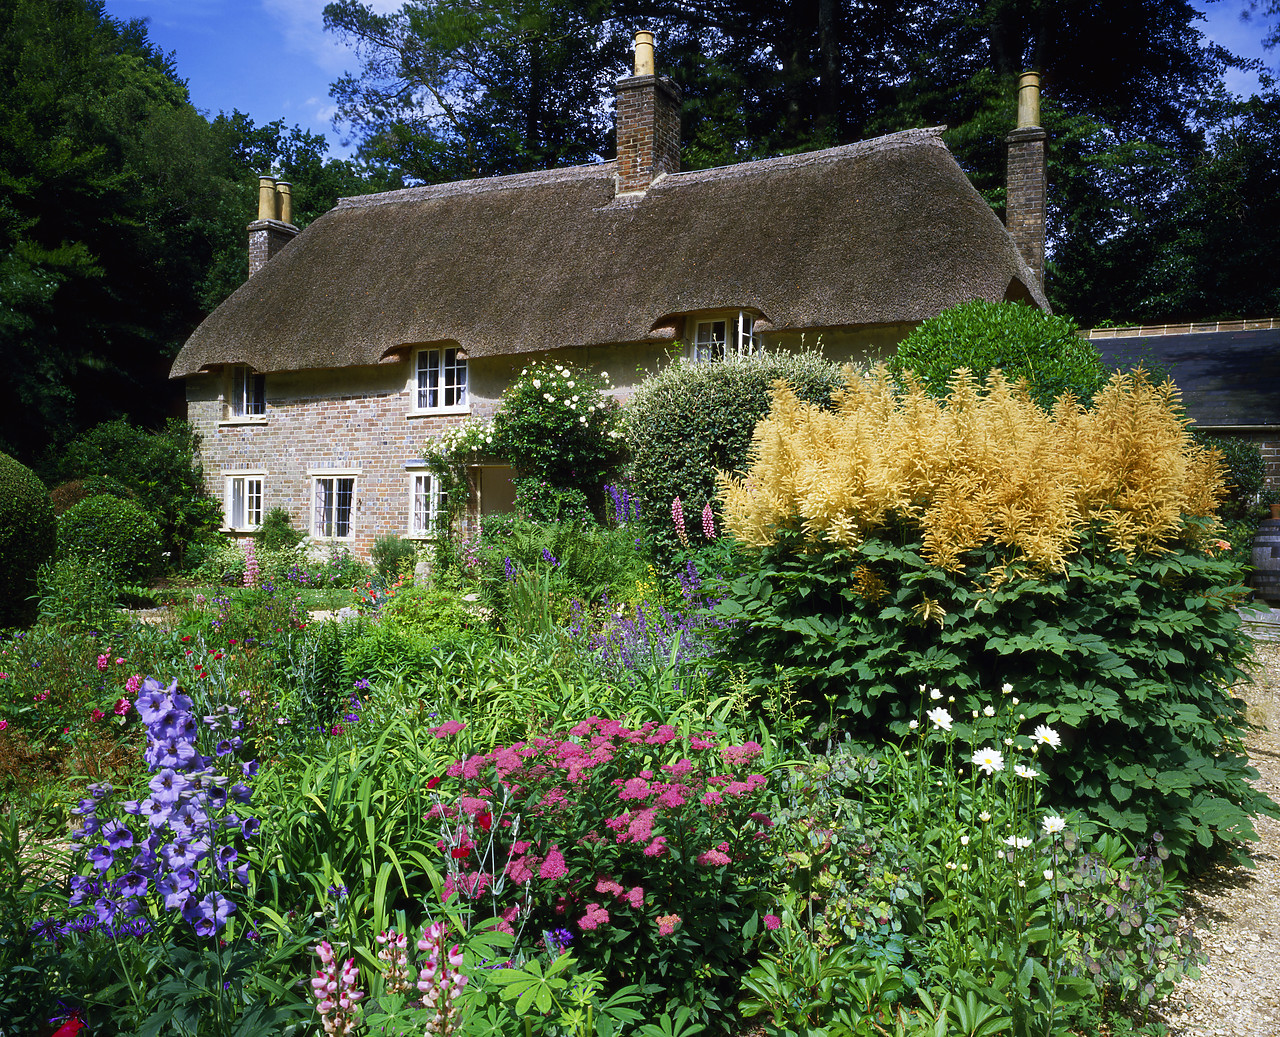 #86745-1 - Thomas Hardy's Cottage & Garden, Higher Bockhampton, Dorset, England